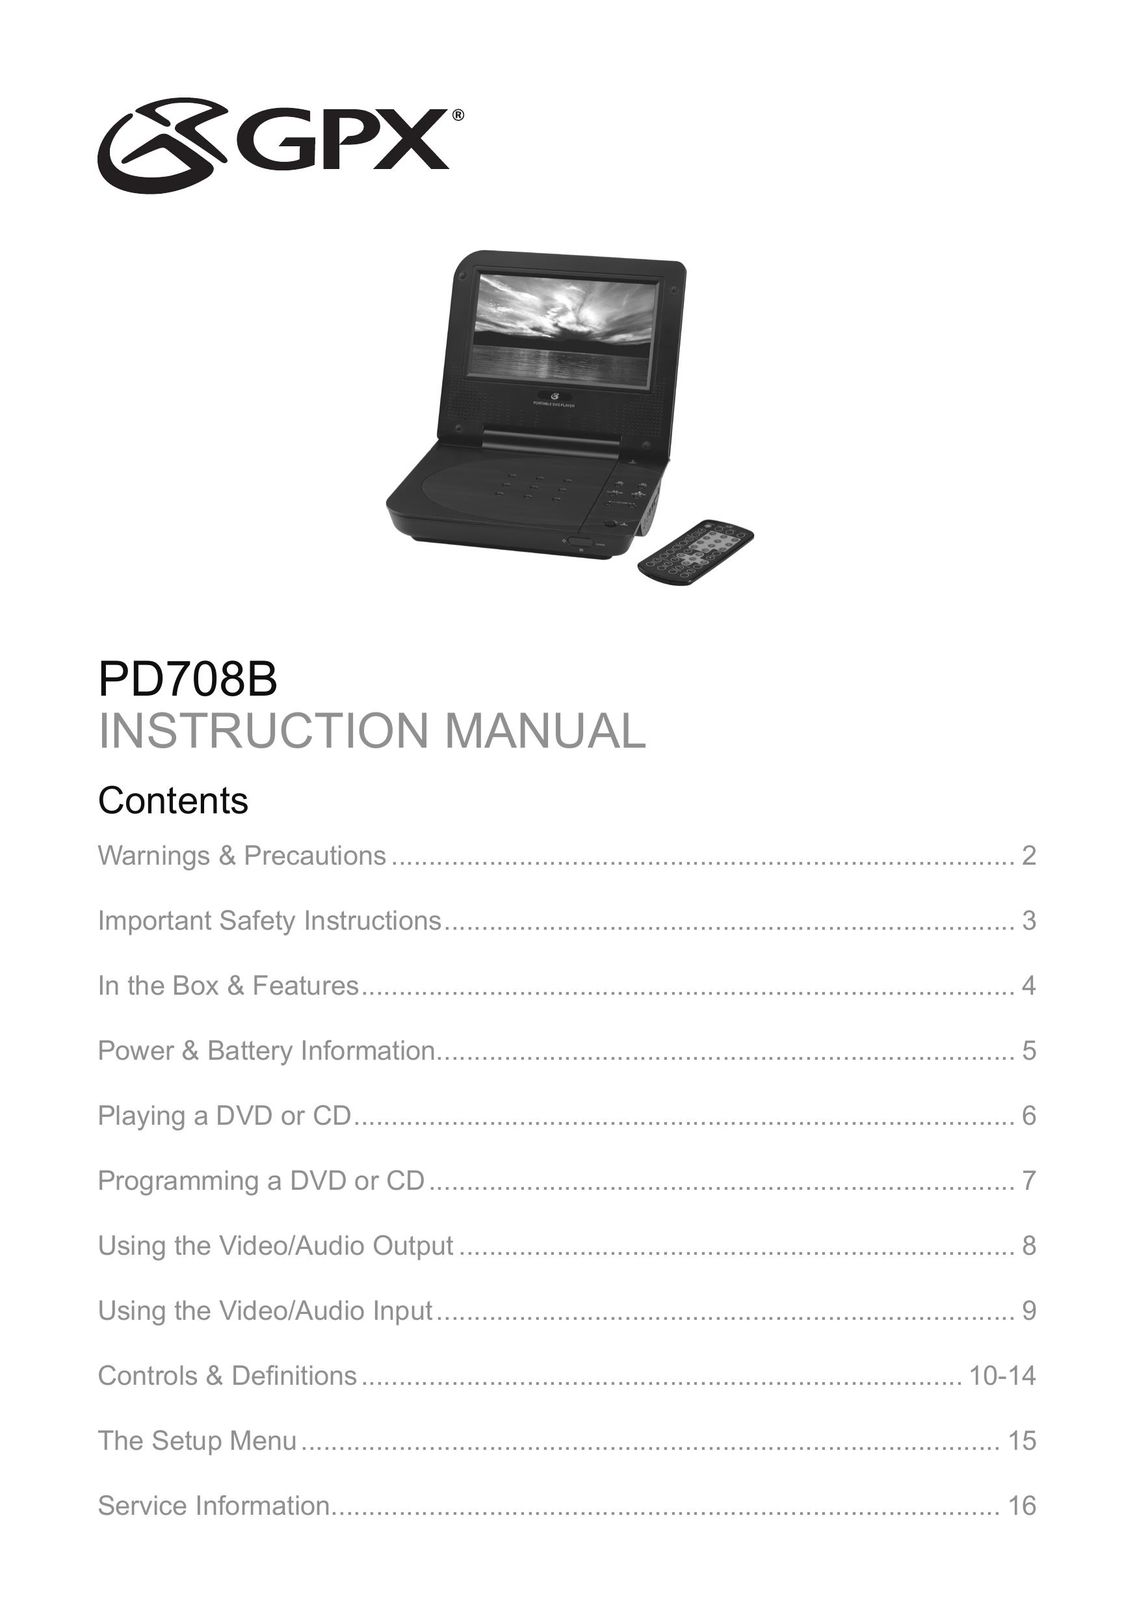 GPX PD708B CD Player User Manual